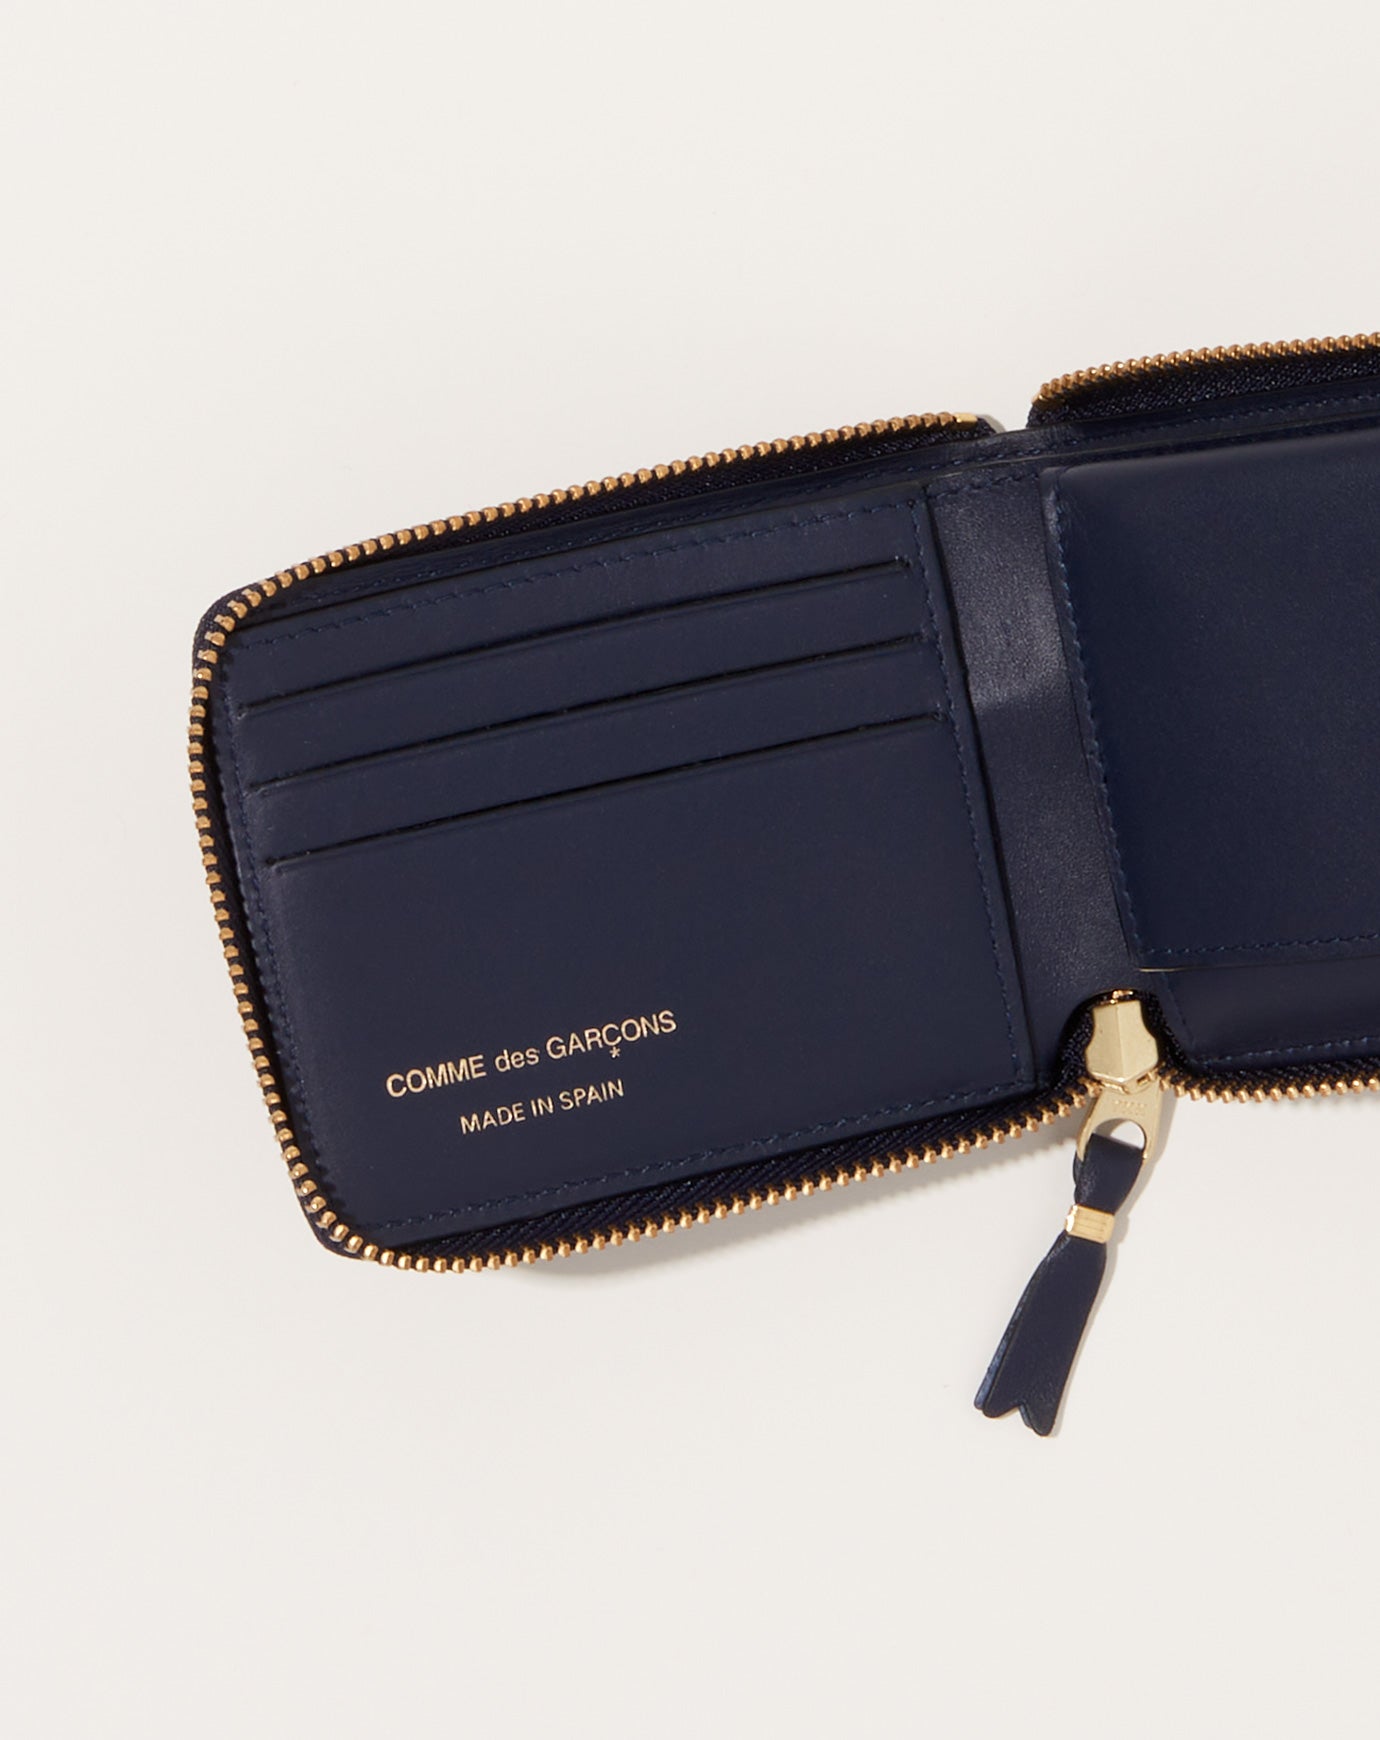 Comme des Garçons  Classic Leather Line Wallet in Navy